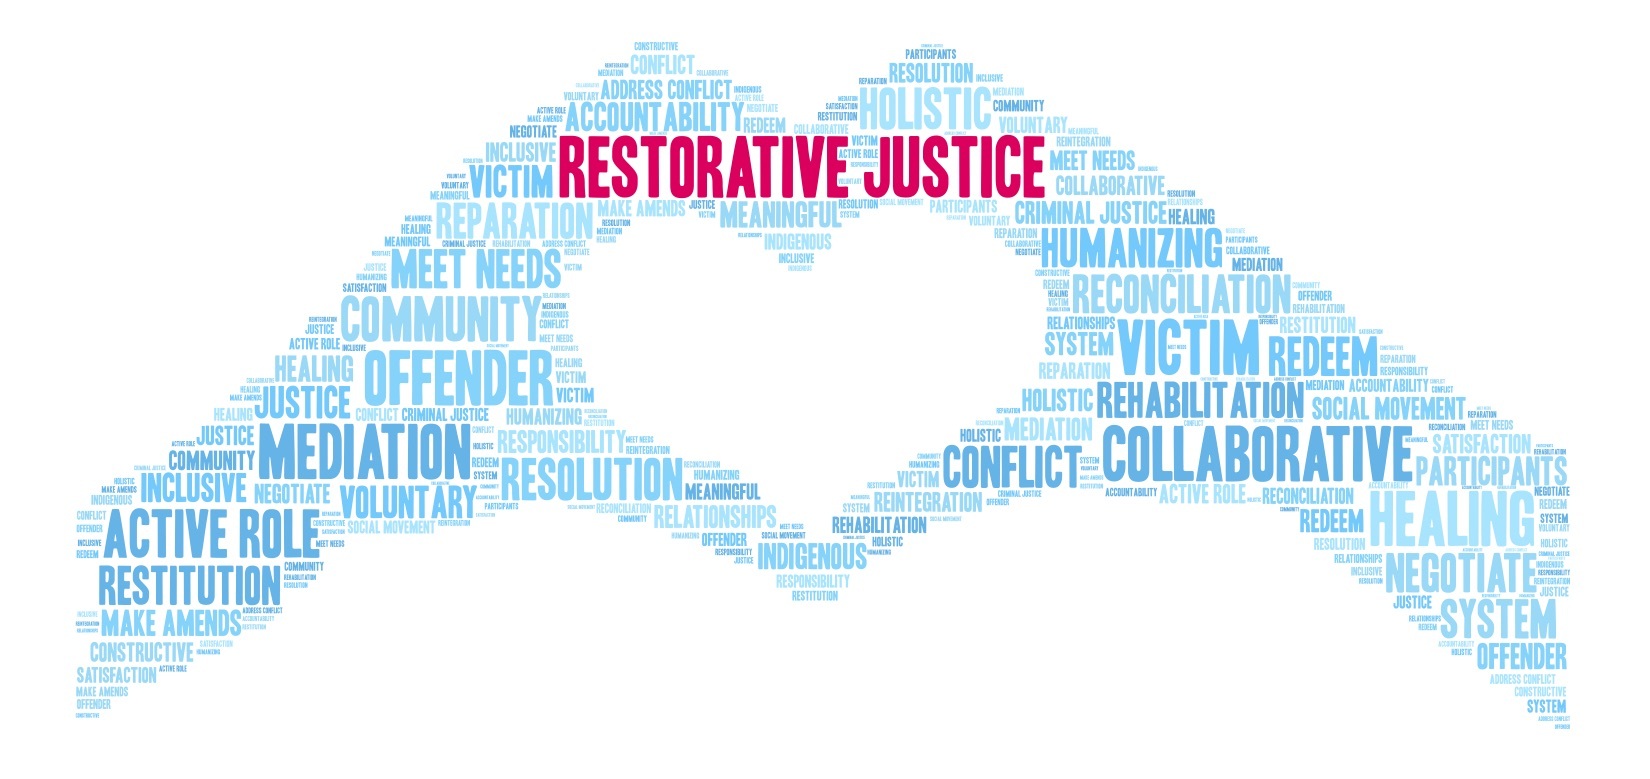 JAM now restorative justice